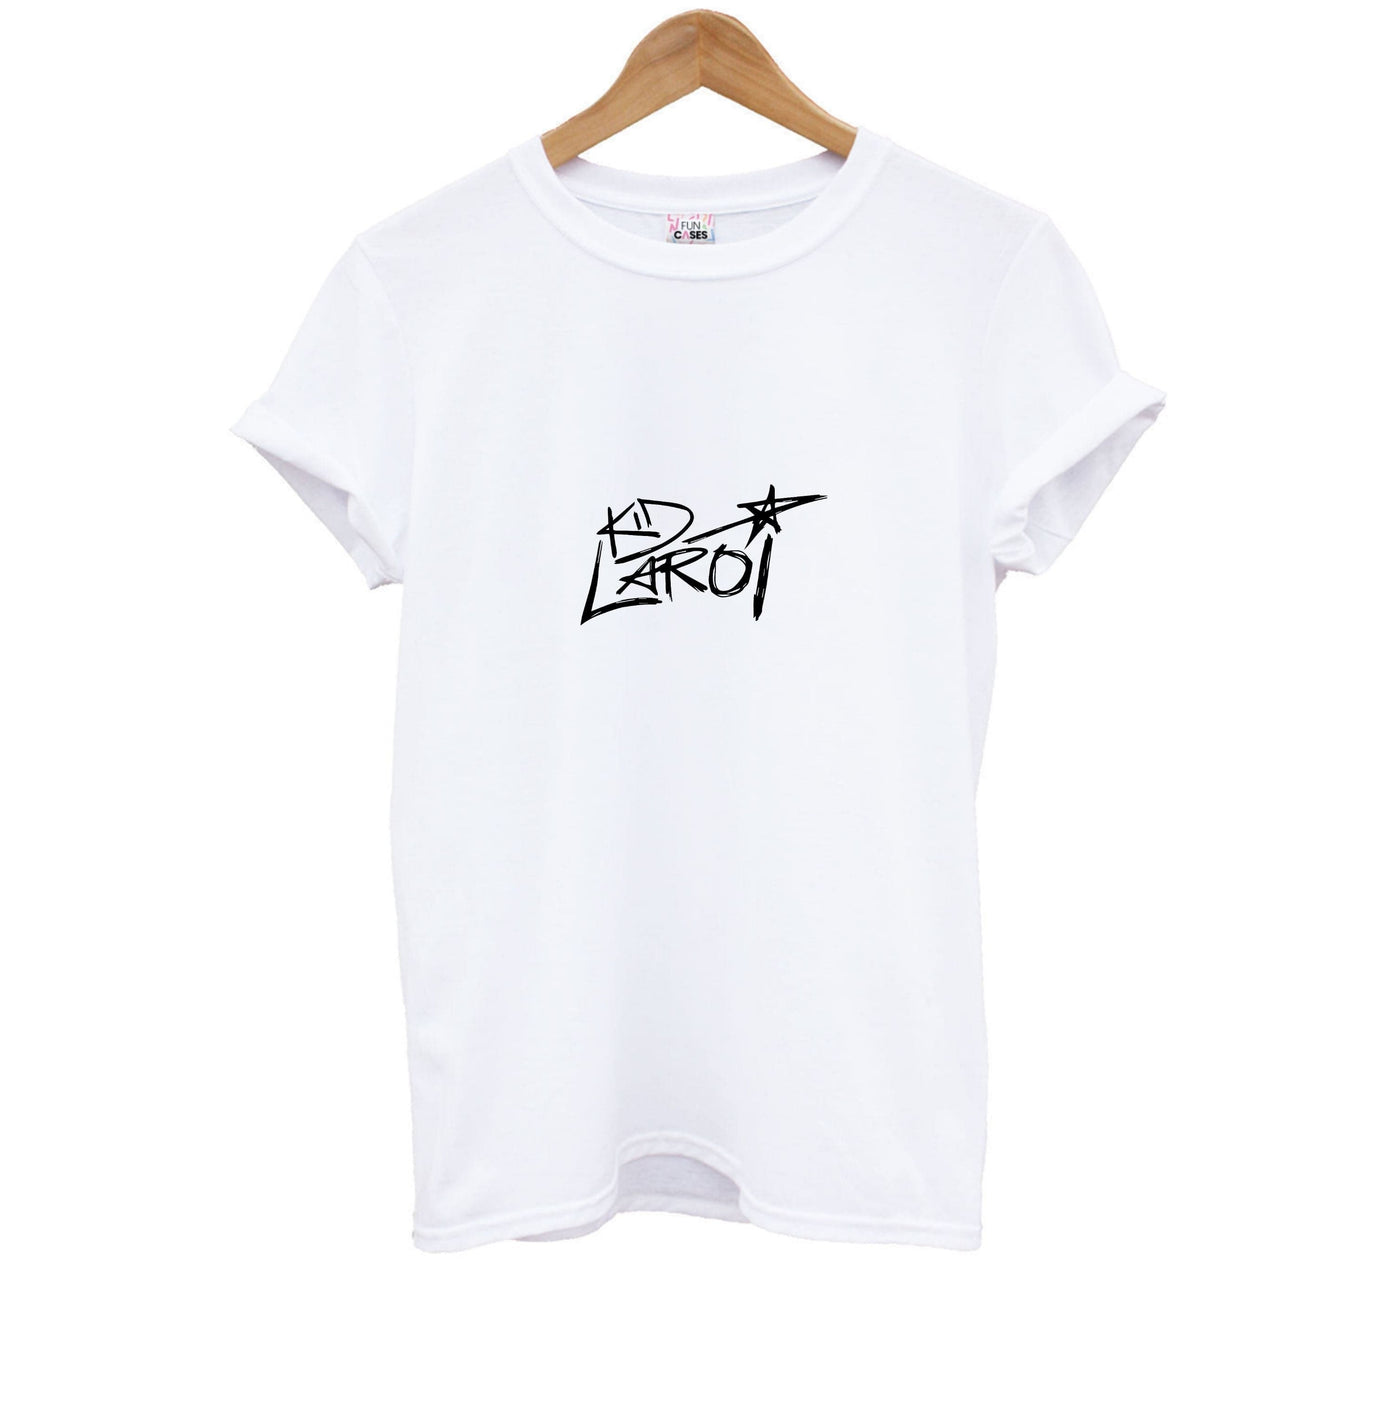 Kid Laroi Sketch  Kids T-Shirt